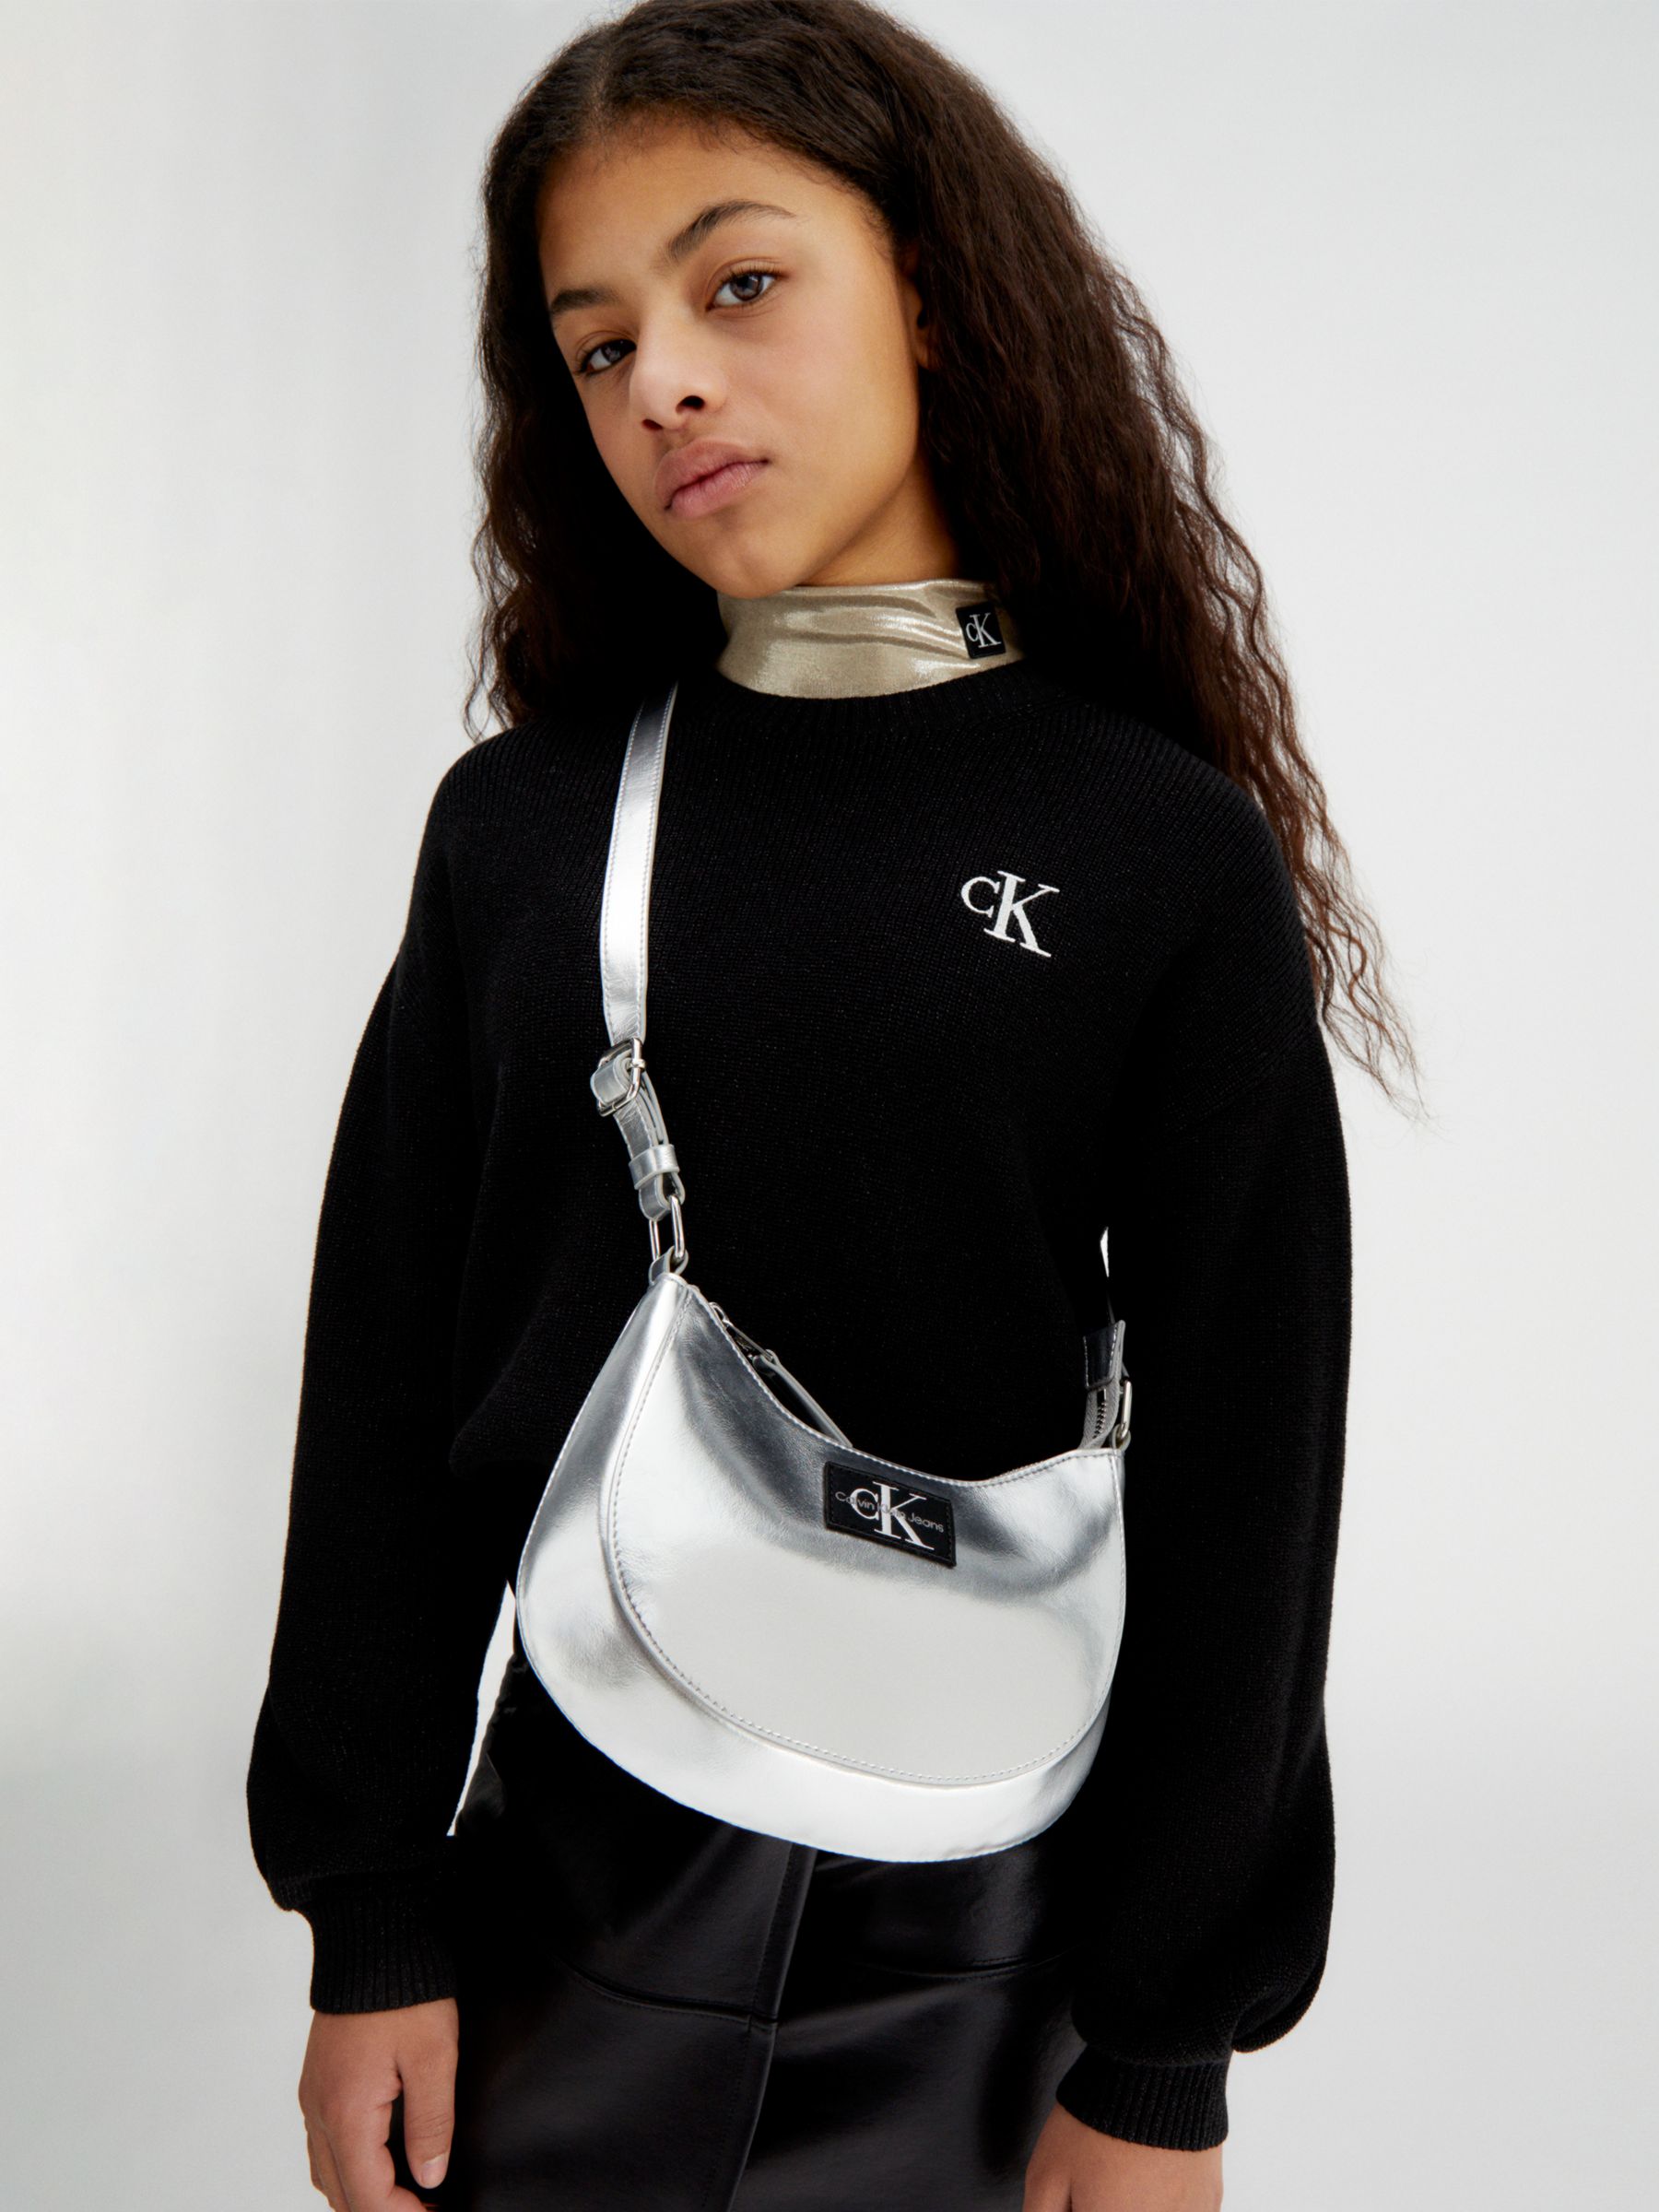 Calvin Klein Kids' Logo Metallic Bag, Silver, One Size